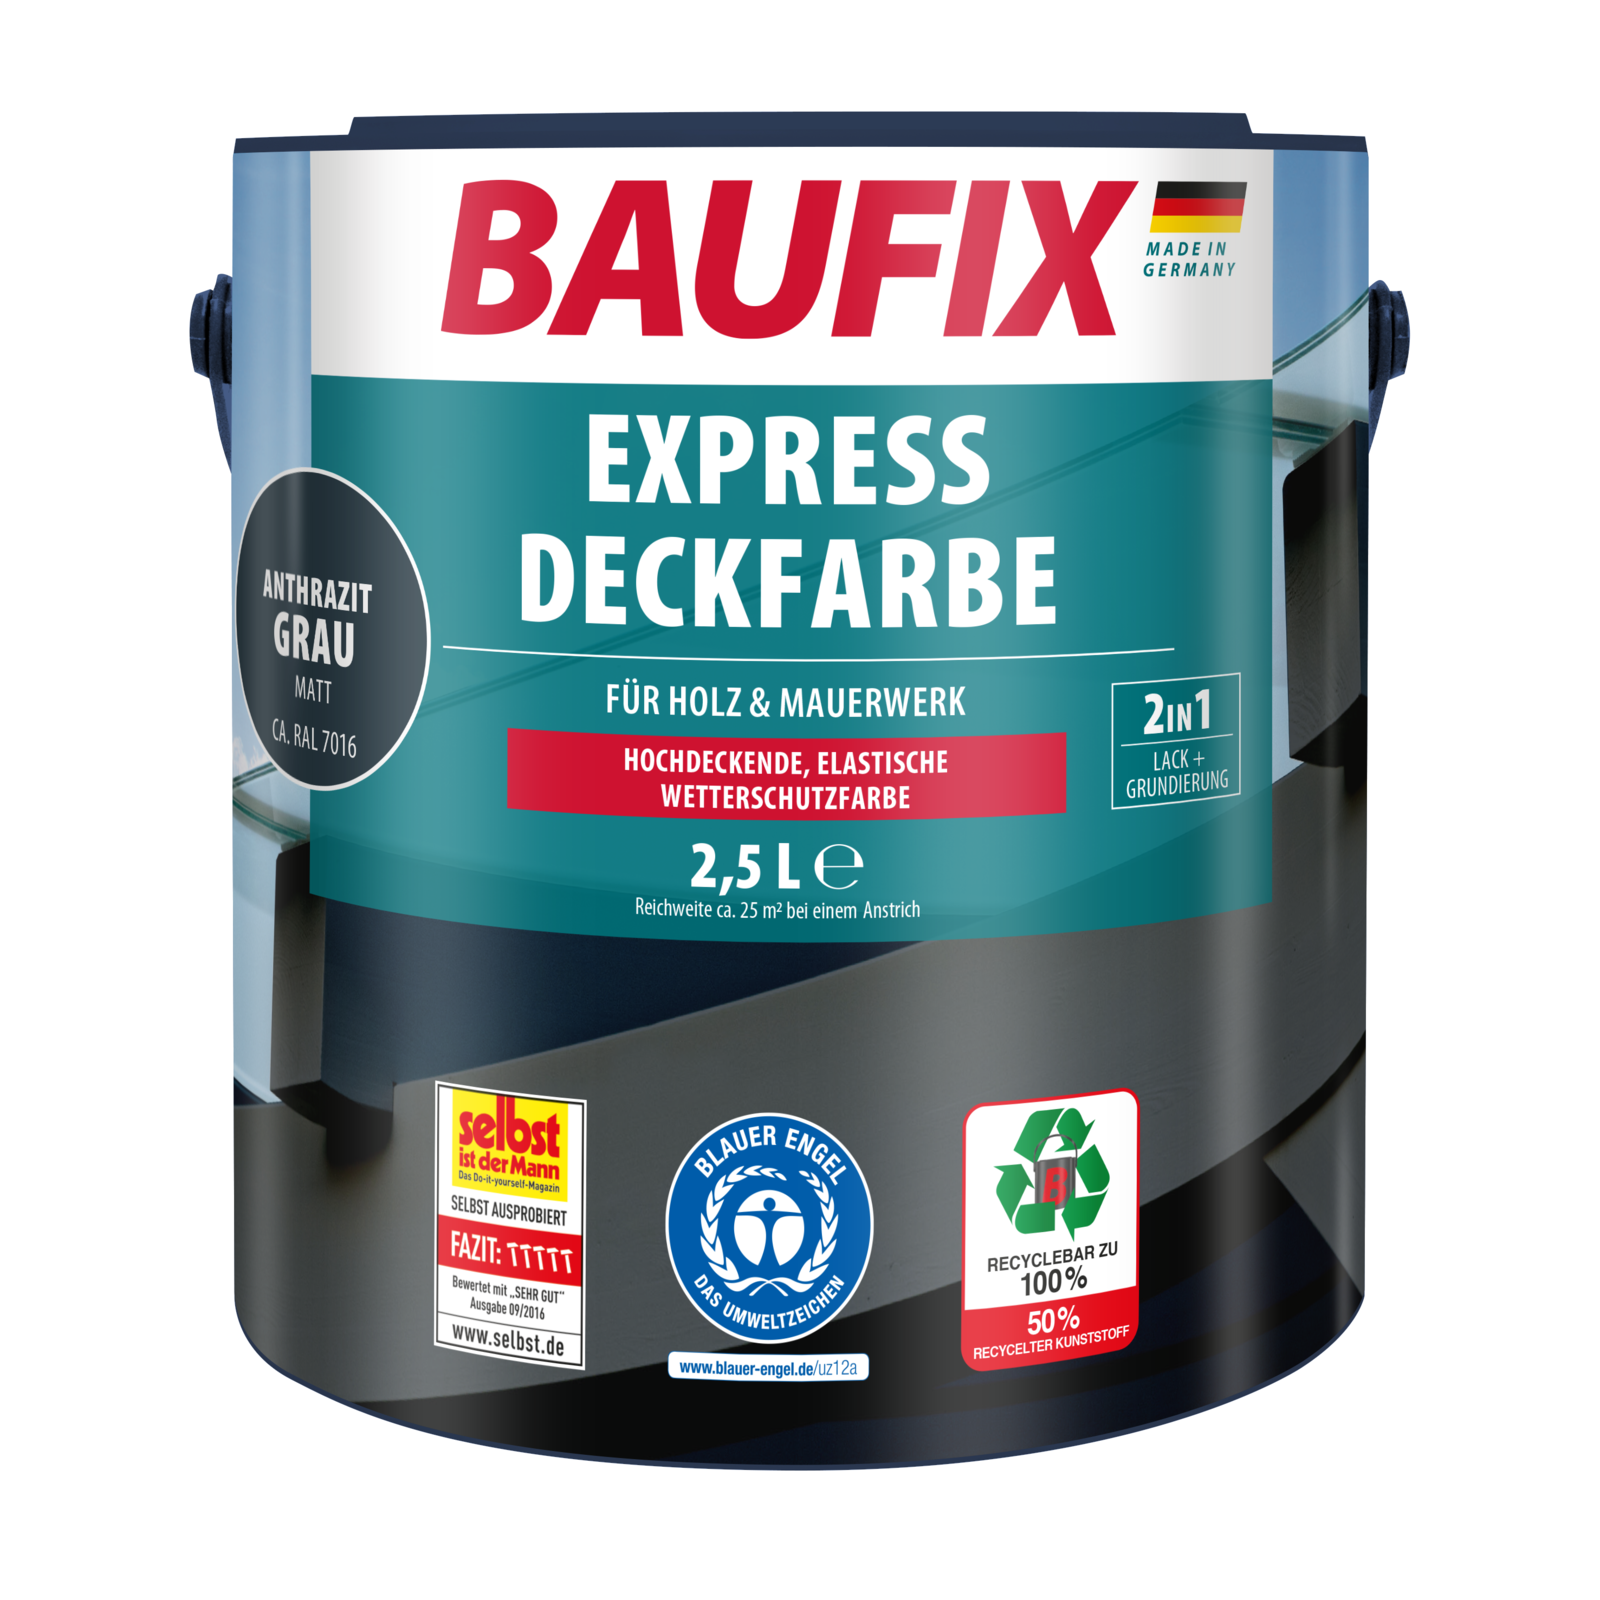 BAUFIX Express Deckfarbe anthrazitgrau | Norma24